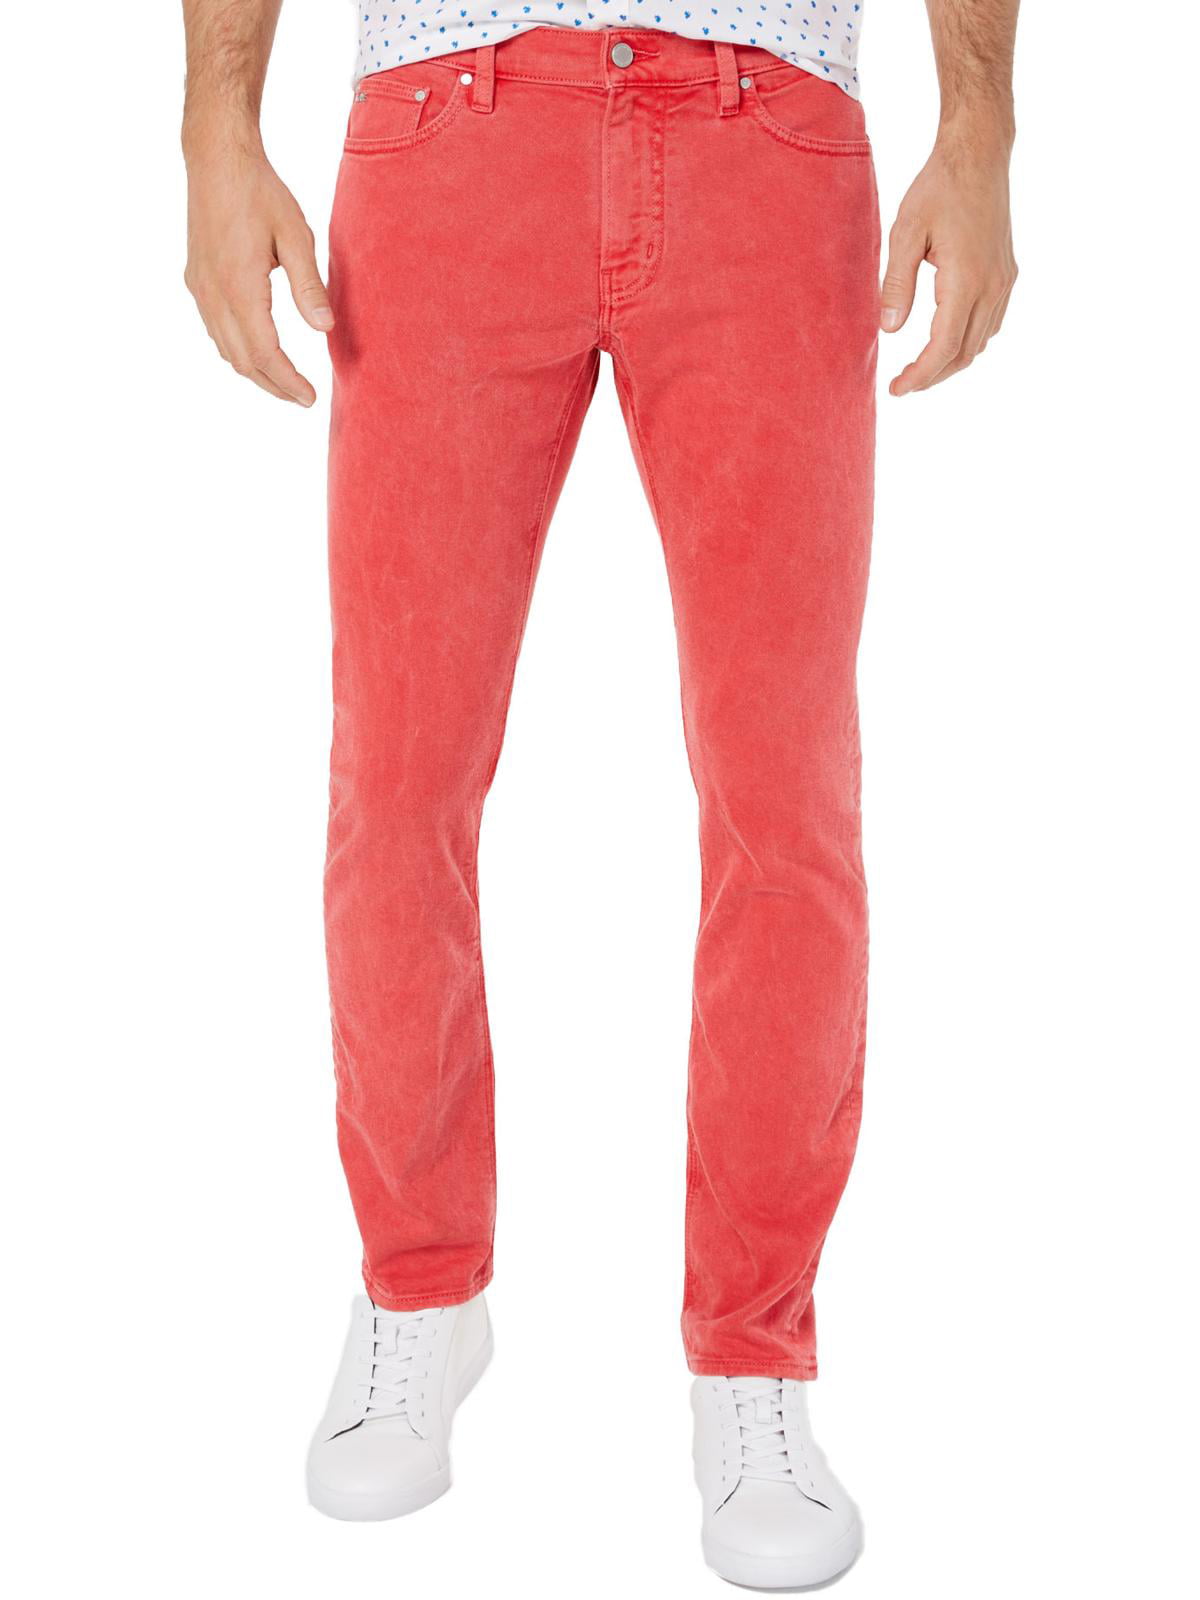 Michael Mens Denim Stretch Slim Jeans Red 32/32 - Walmart.com